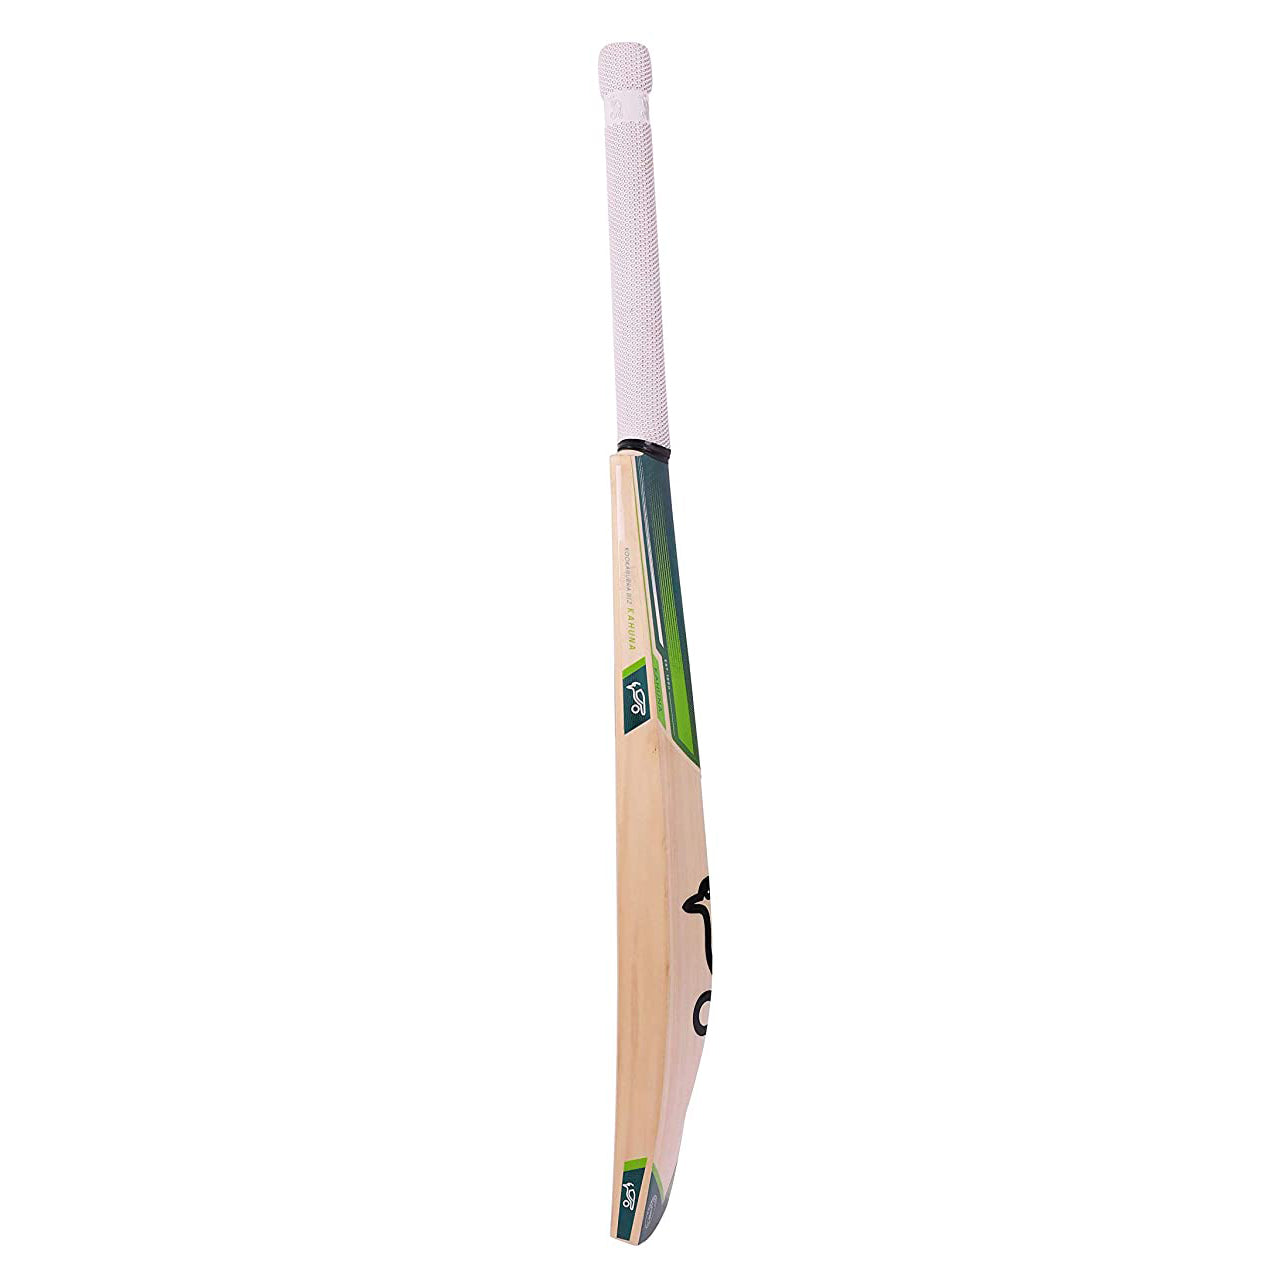 Kookaburra Kahuna 1000 English Willow Cricket Bat - Best Price online Prokicksports.com